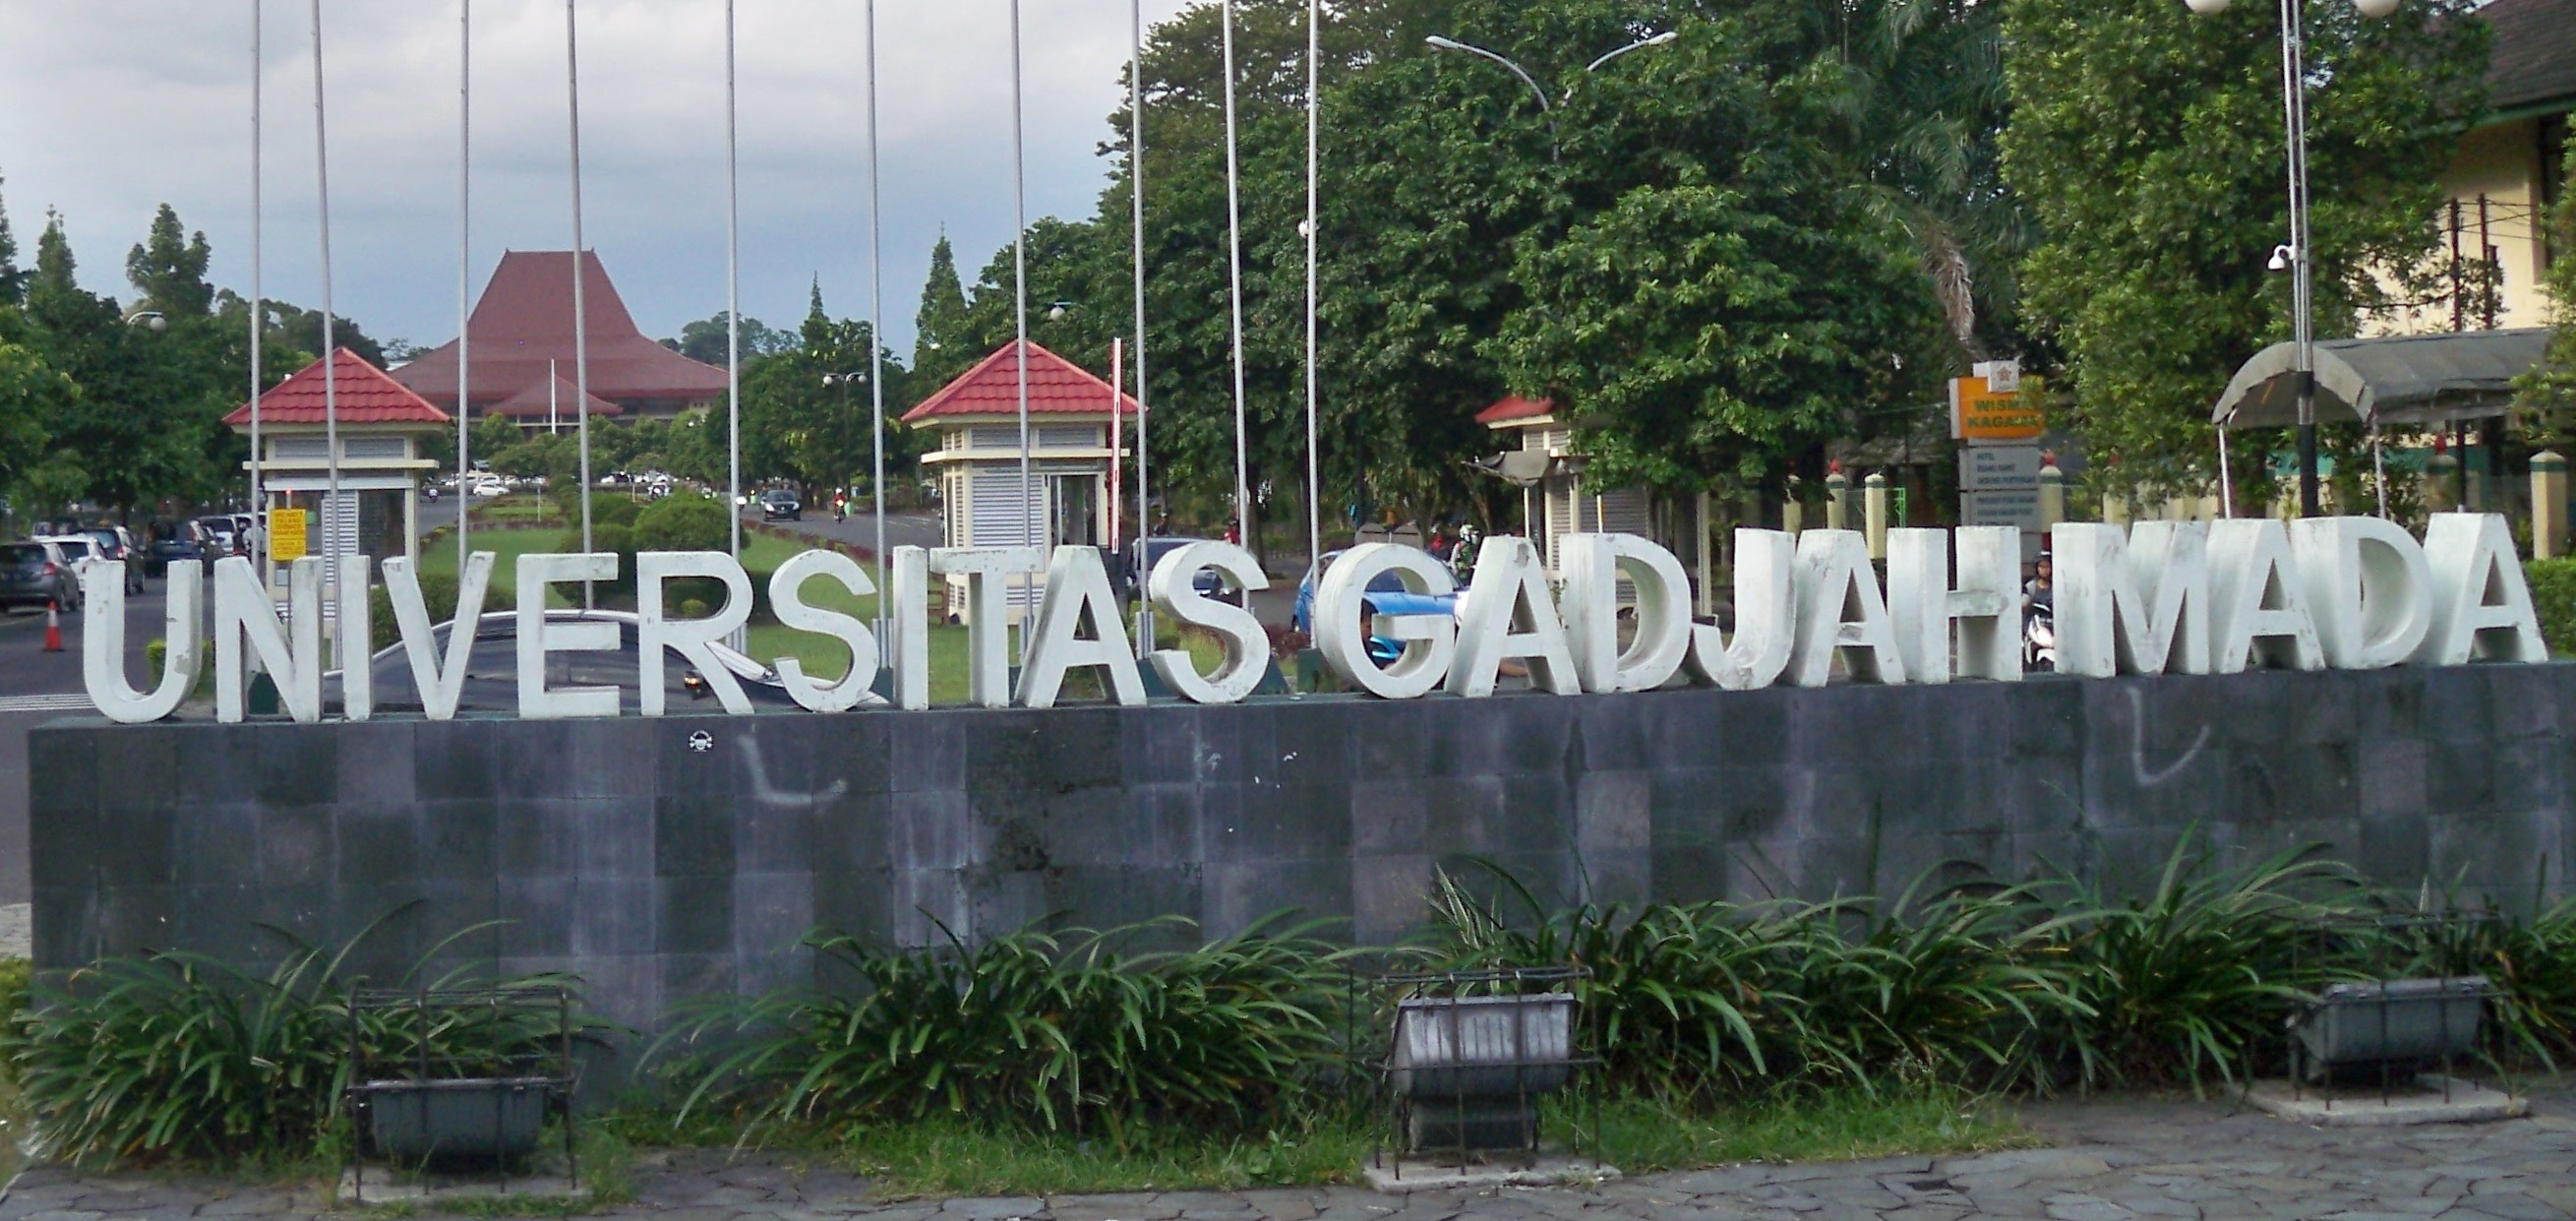 The sign to Universitas Gadjah Mada is pictured.